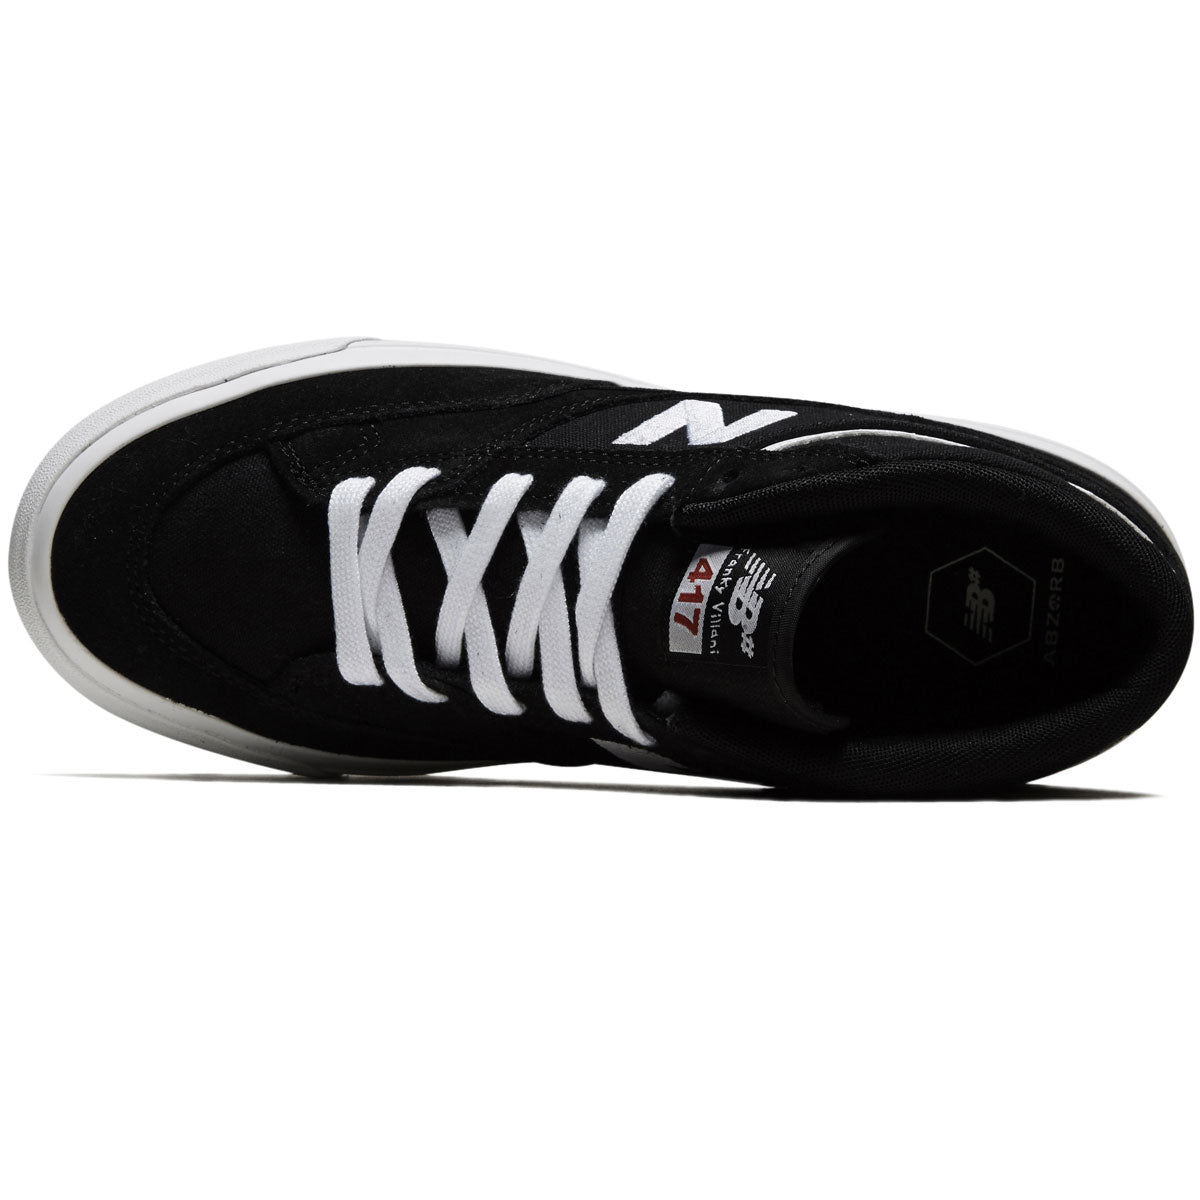 New Balance 417 Villani Shoes - Black/White image 3